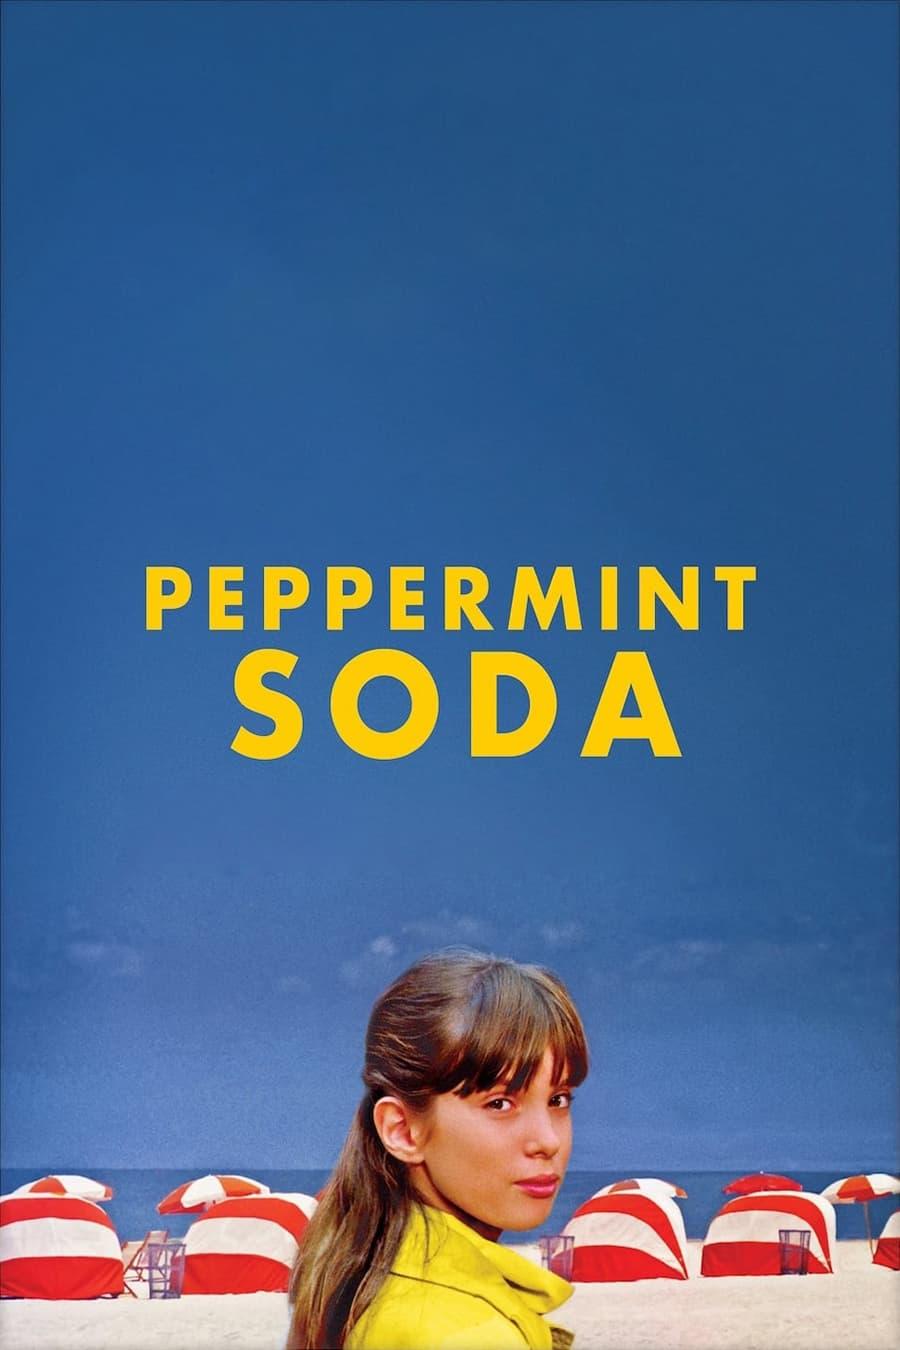 Peppermint Soda poster